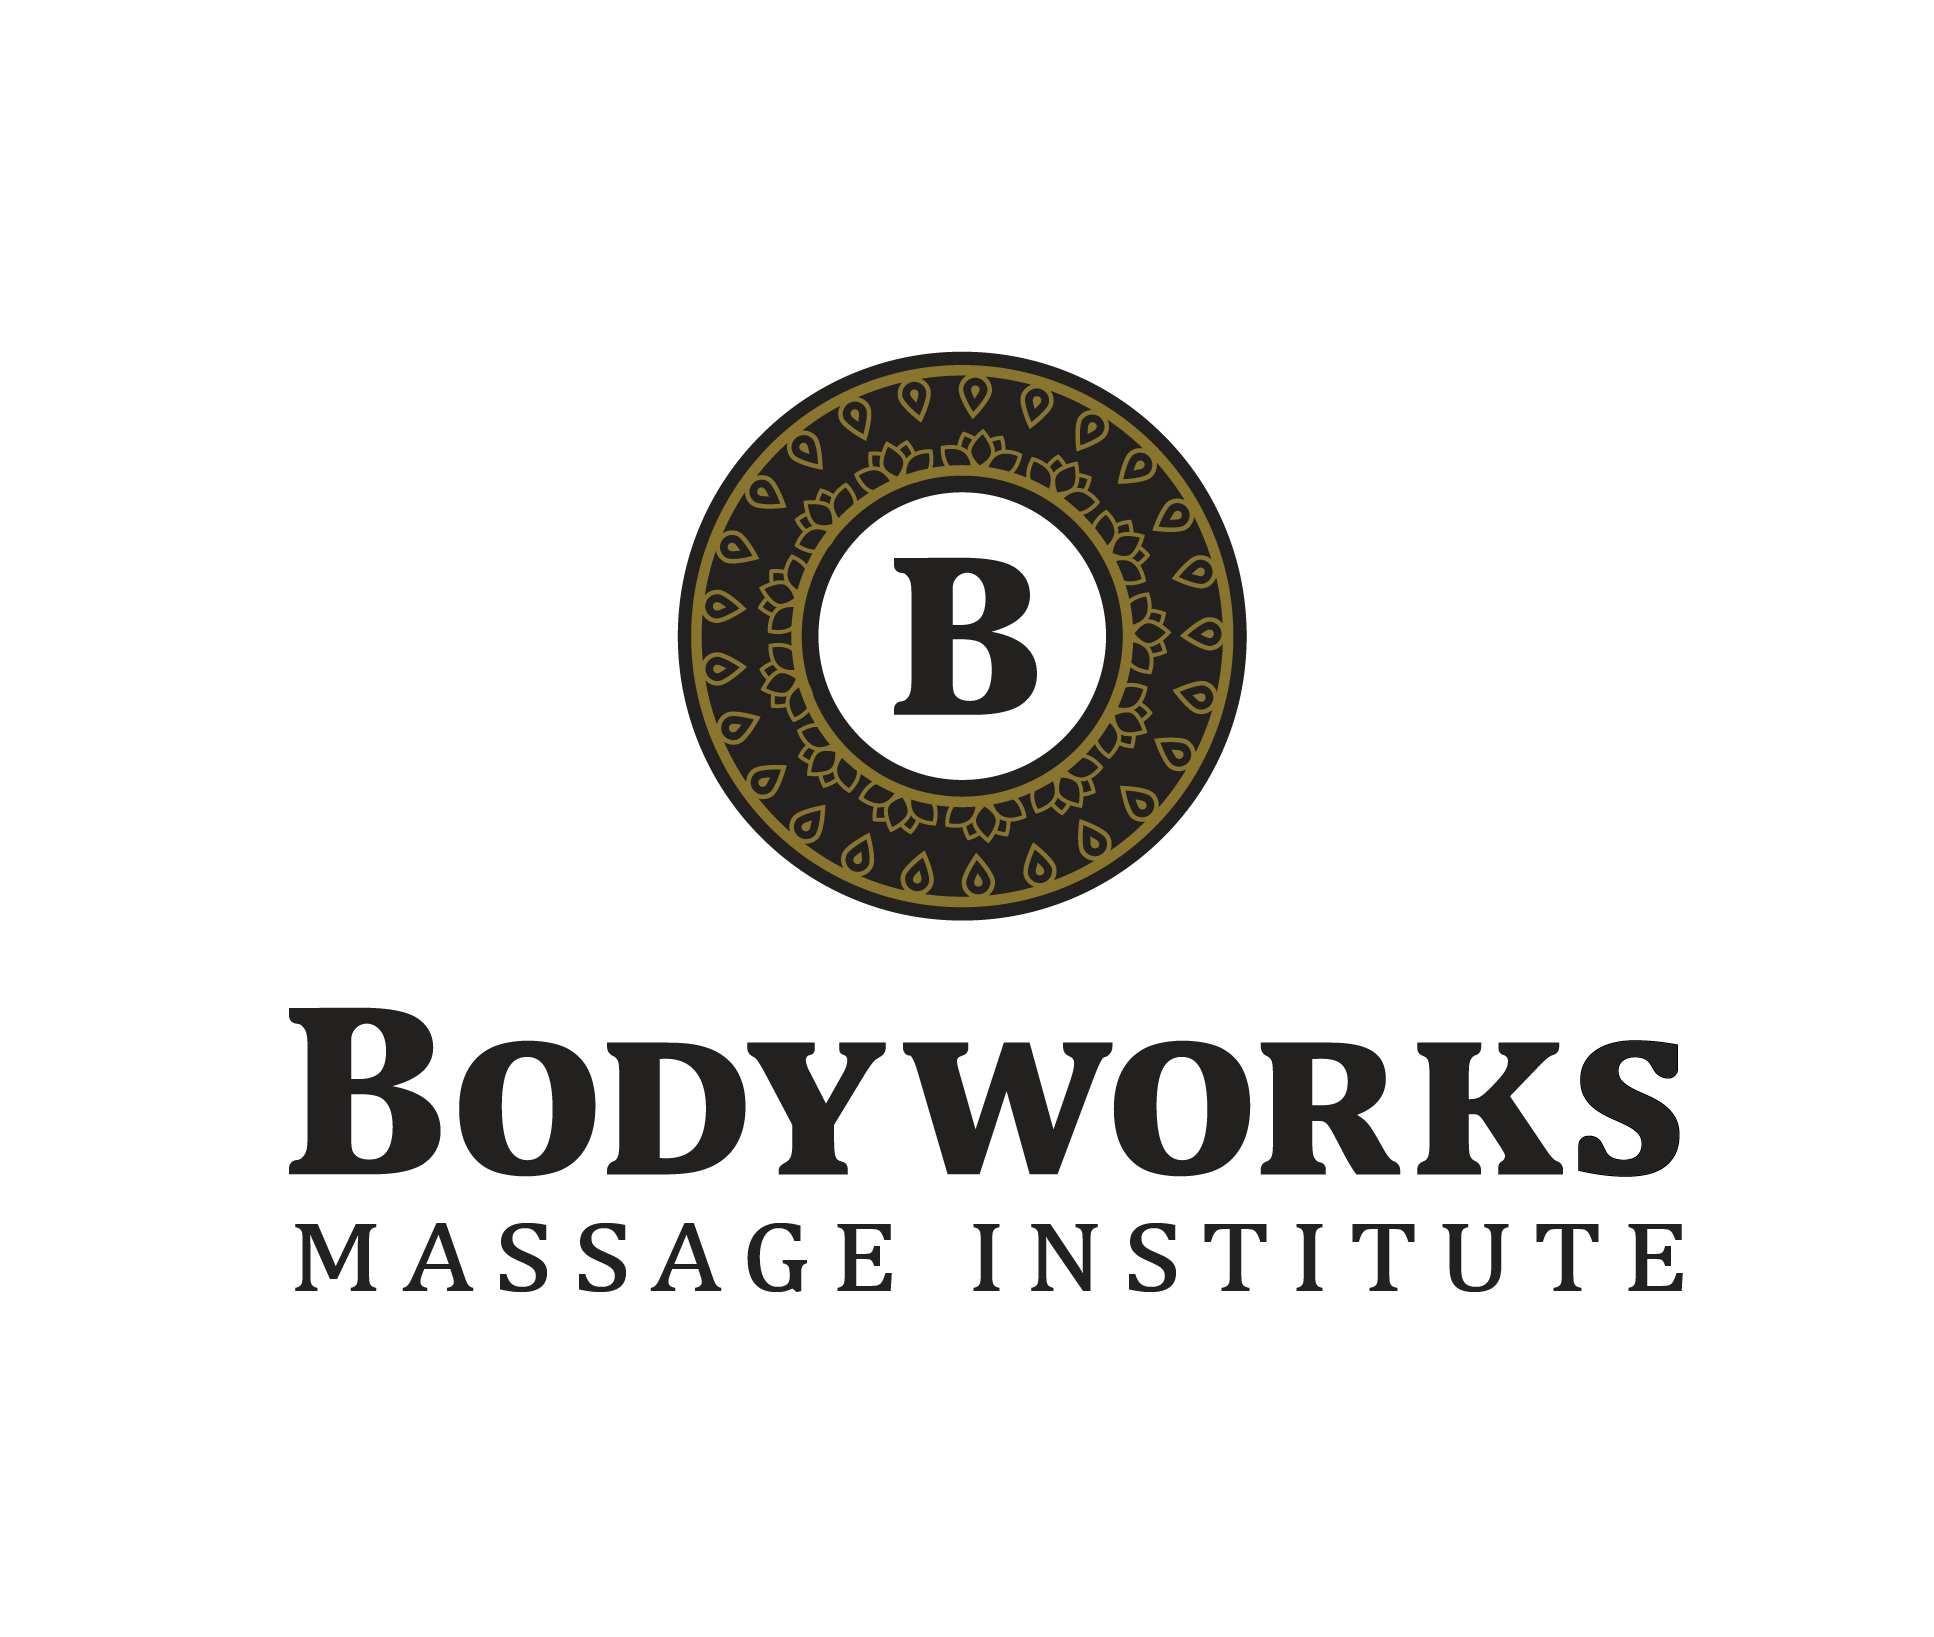 Bodyworks Massage Institute Bodyworks Massage